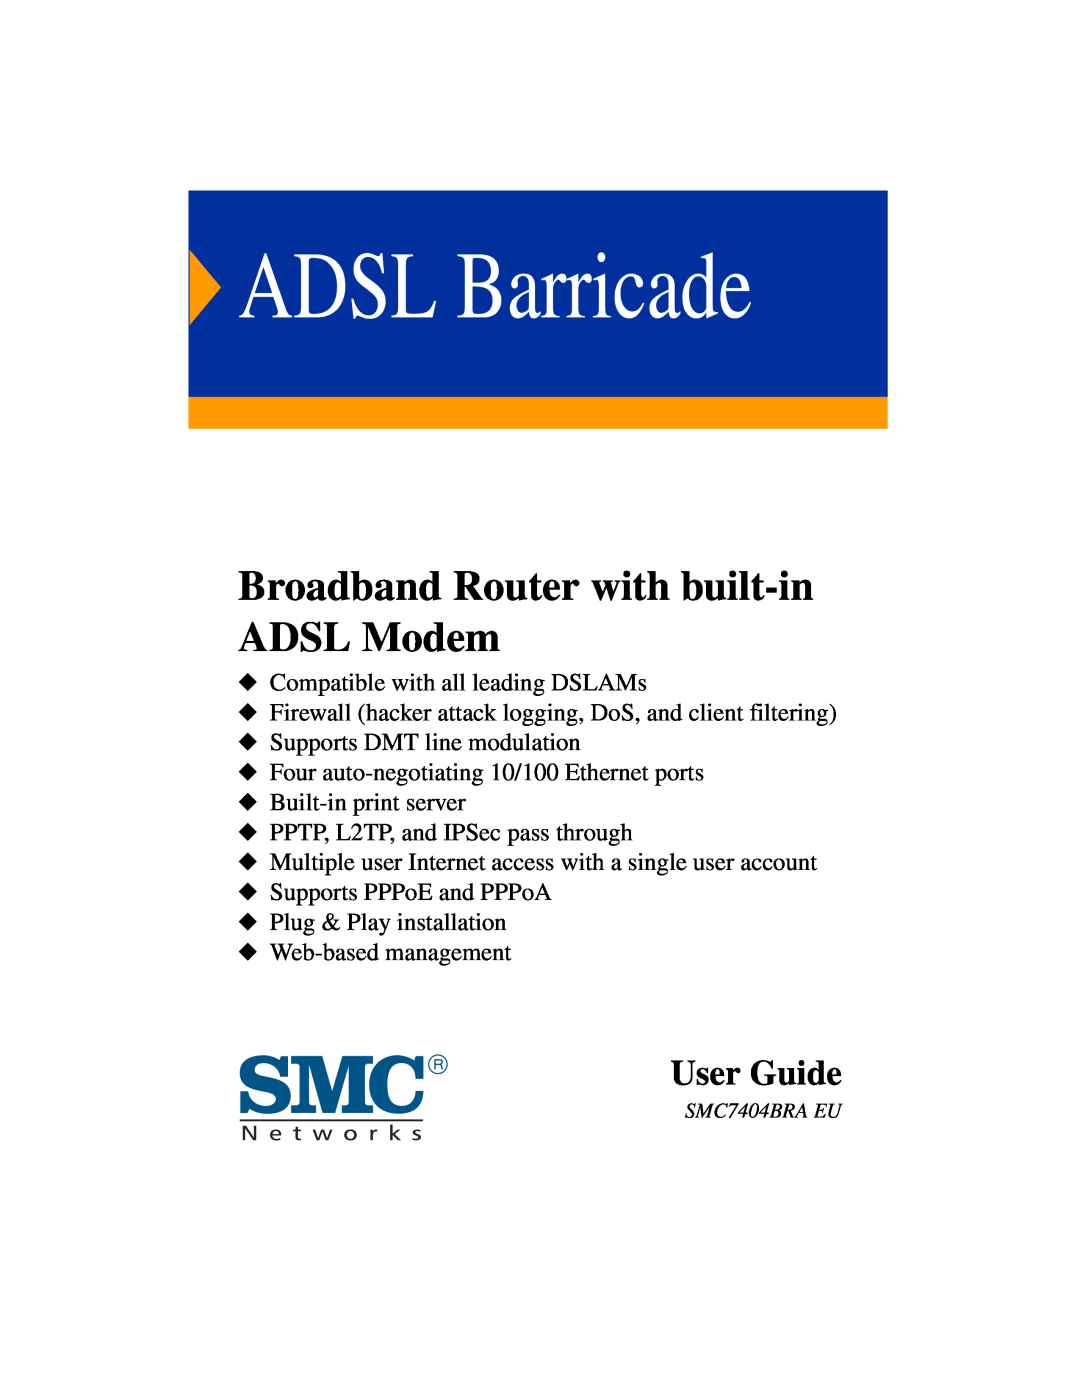 SMC Networks SMC7404BRA EU manual Broadband Router with built-in ADSL Modem, User Guide 